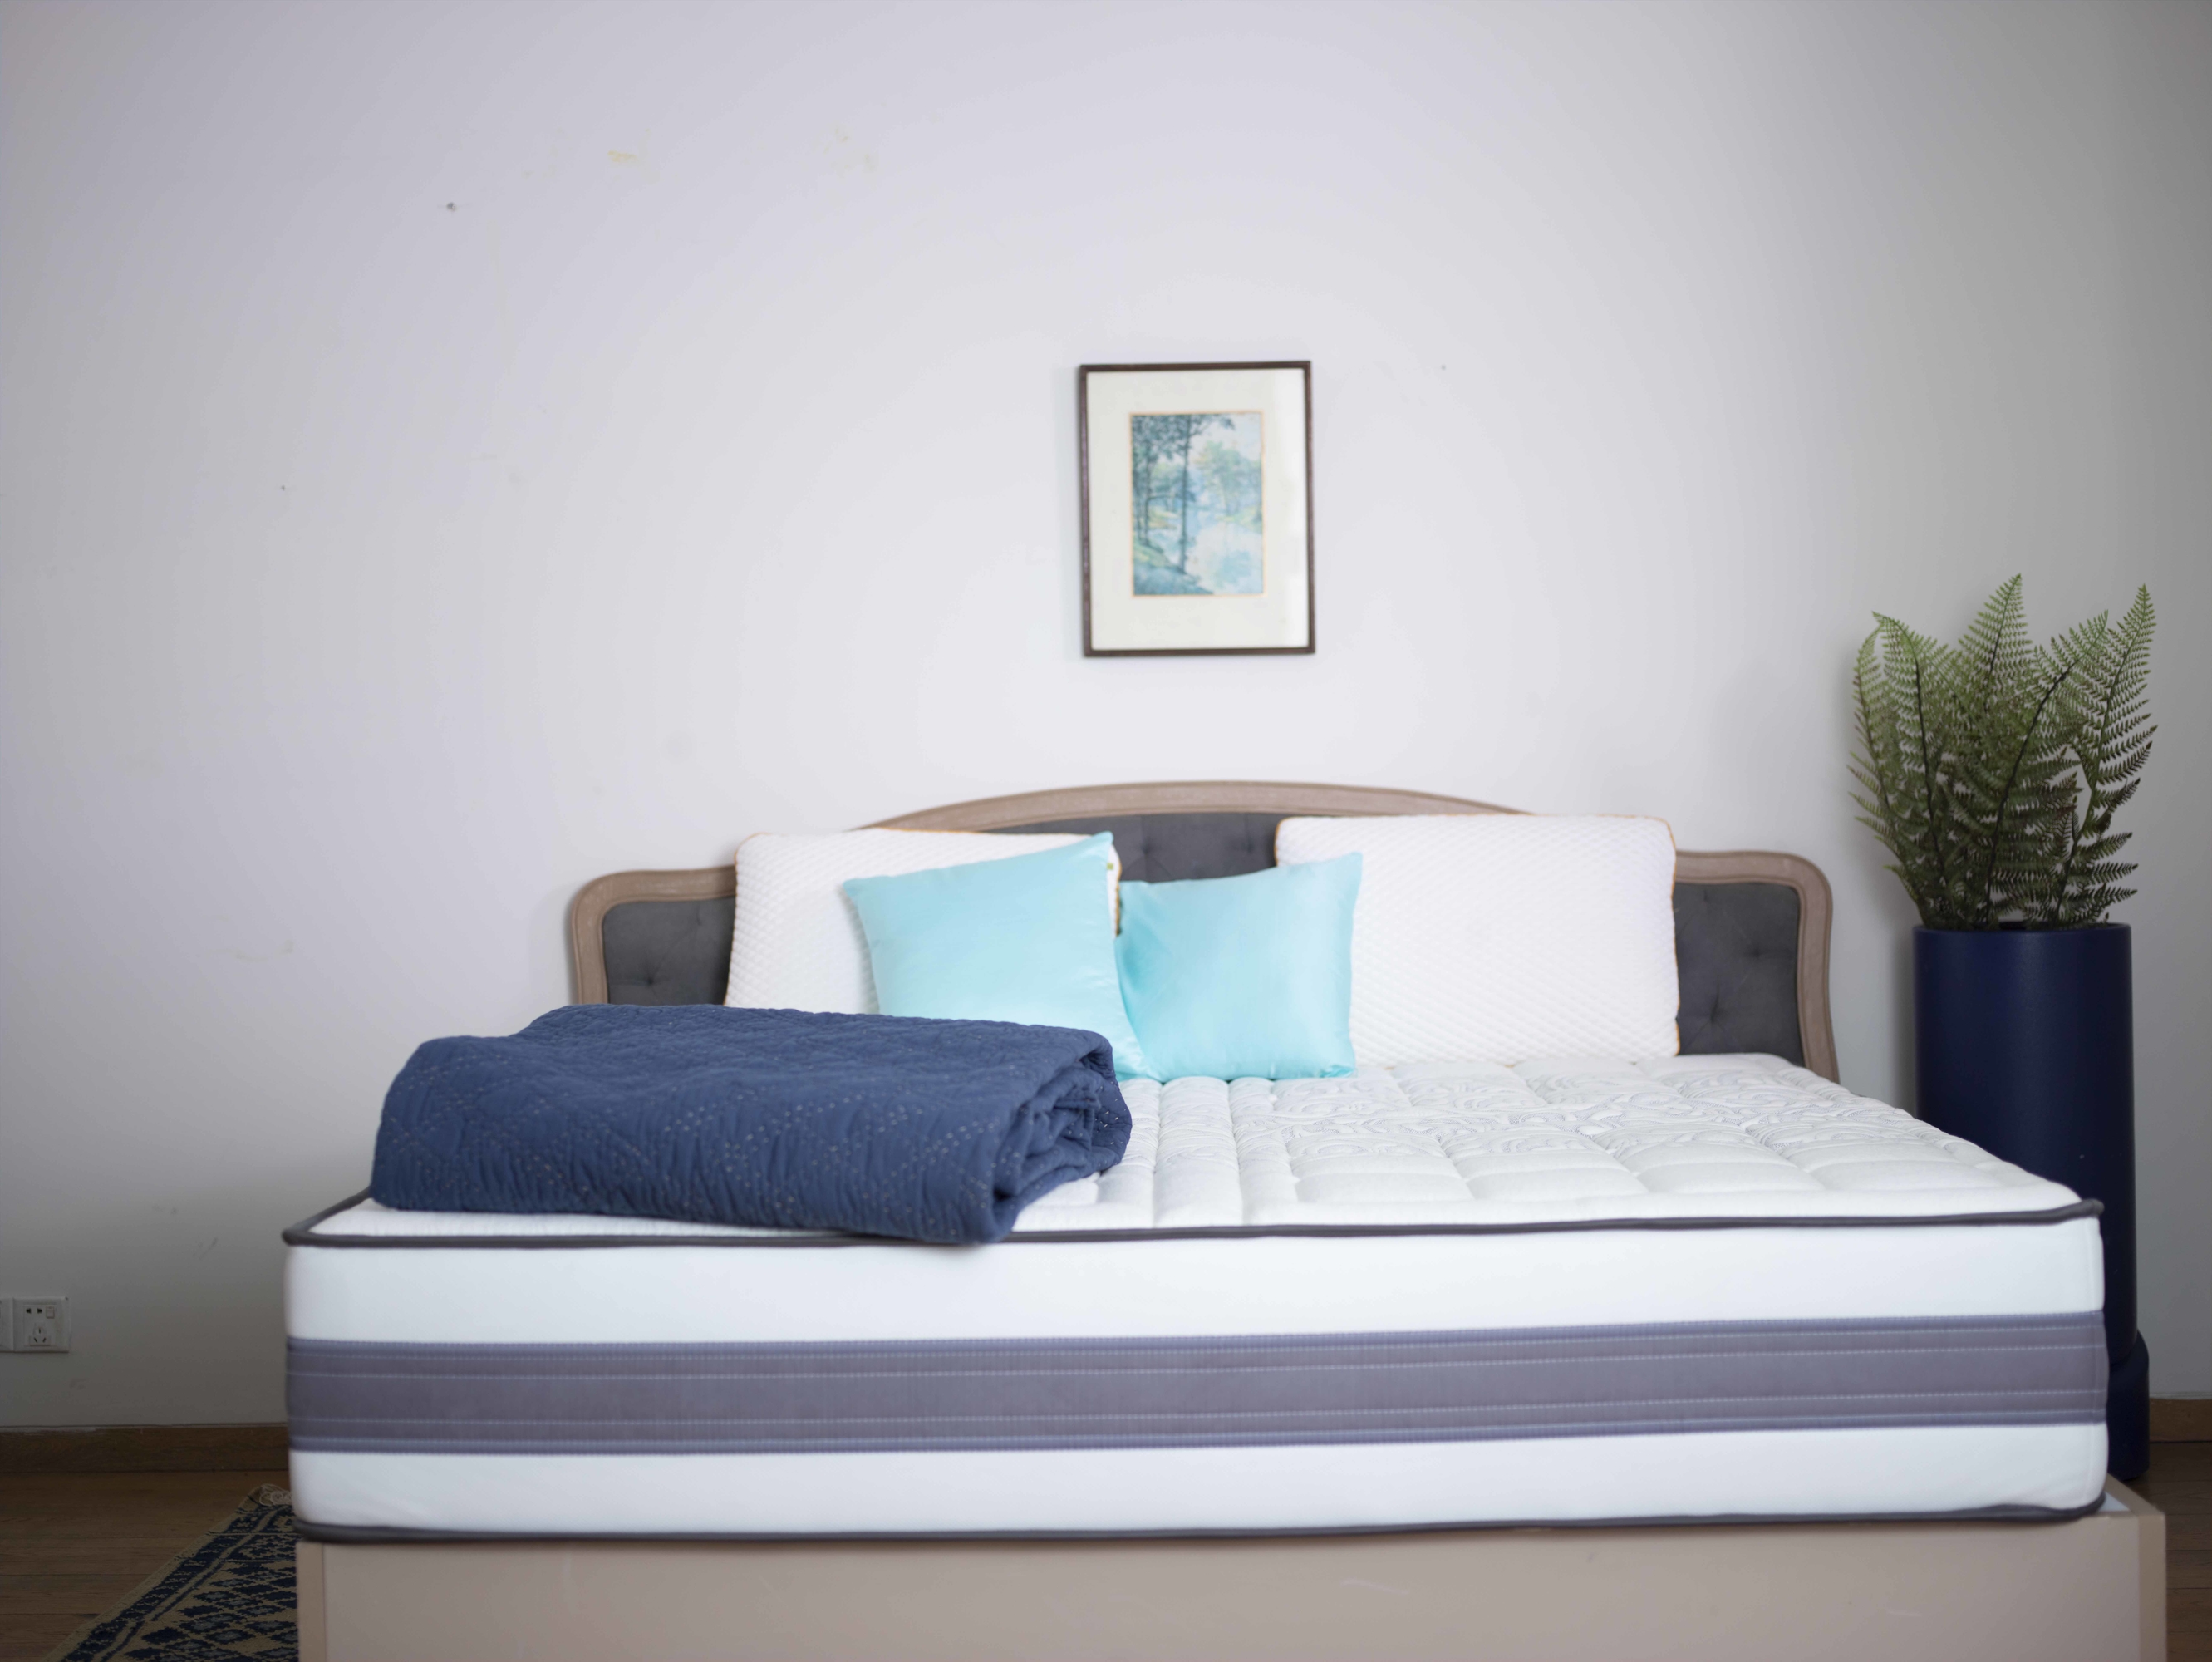 sleepwell duet air mattress online price